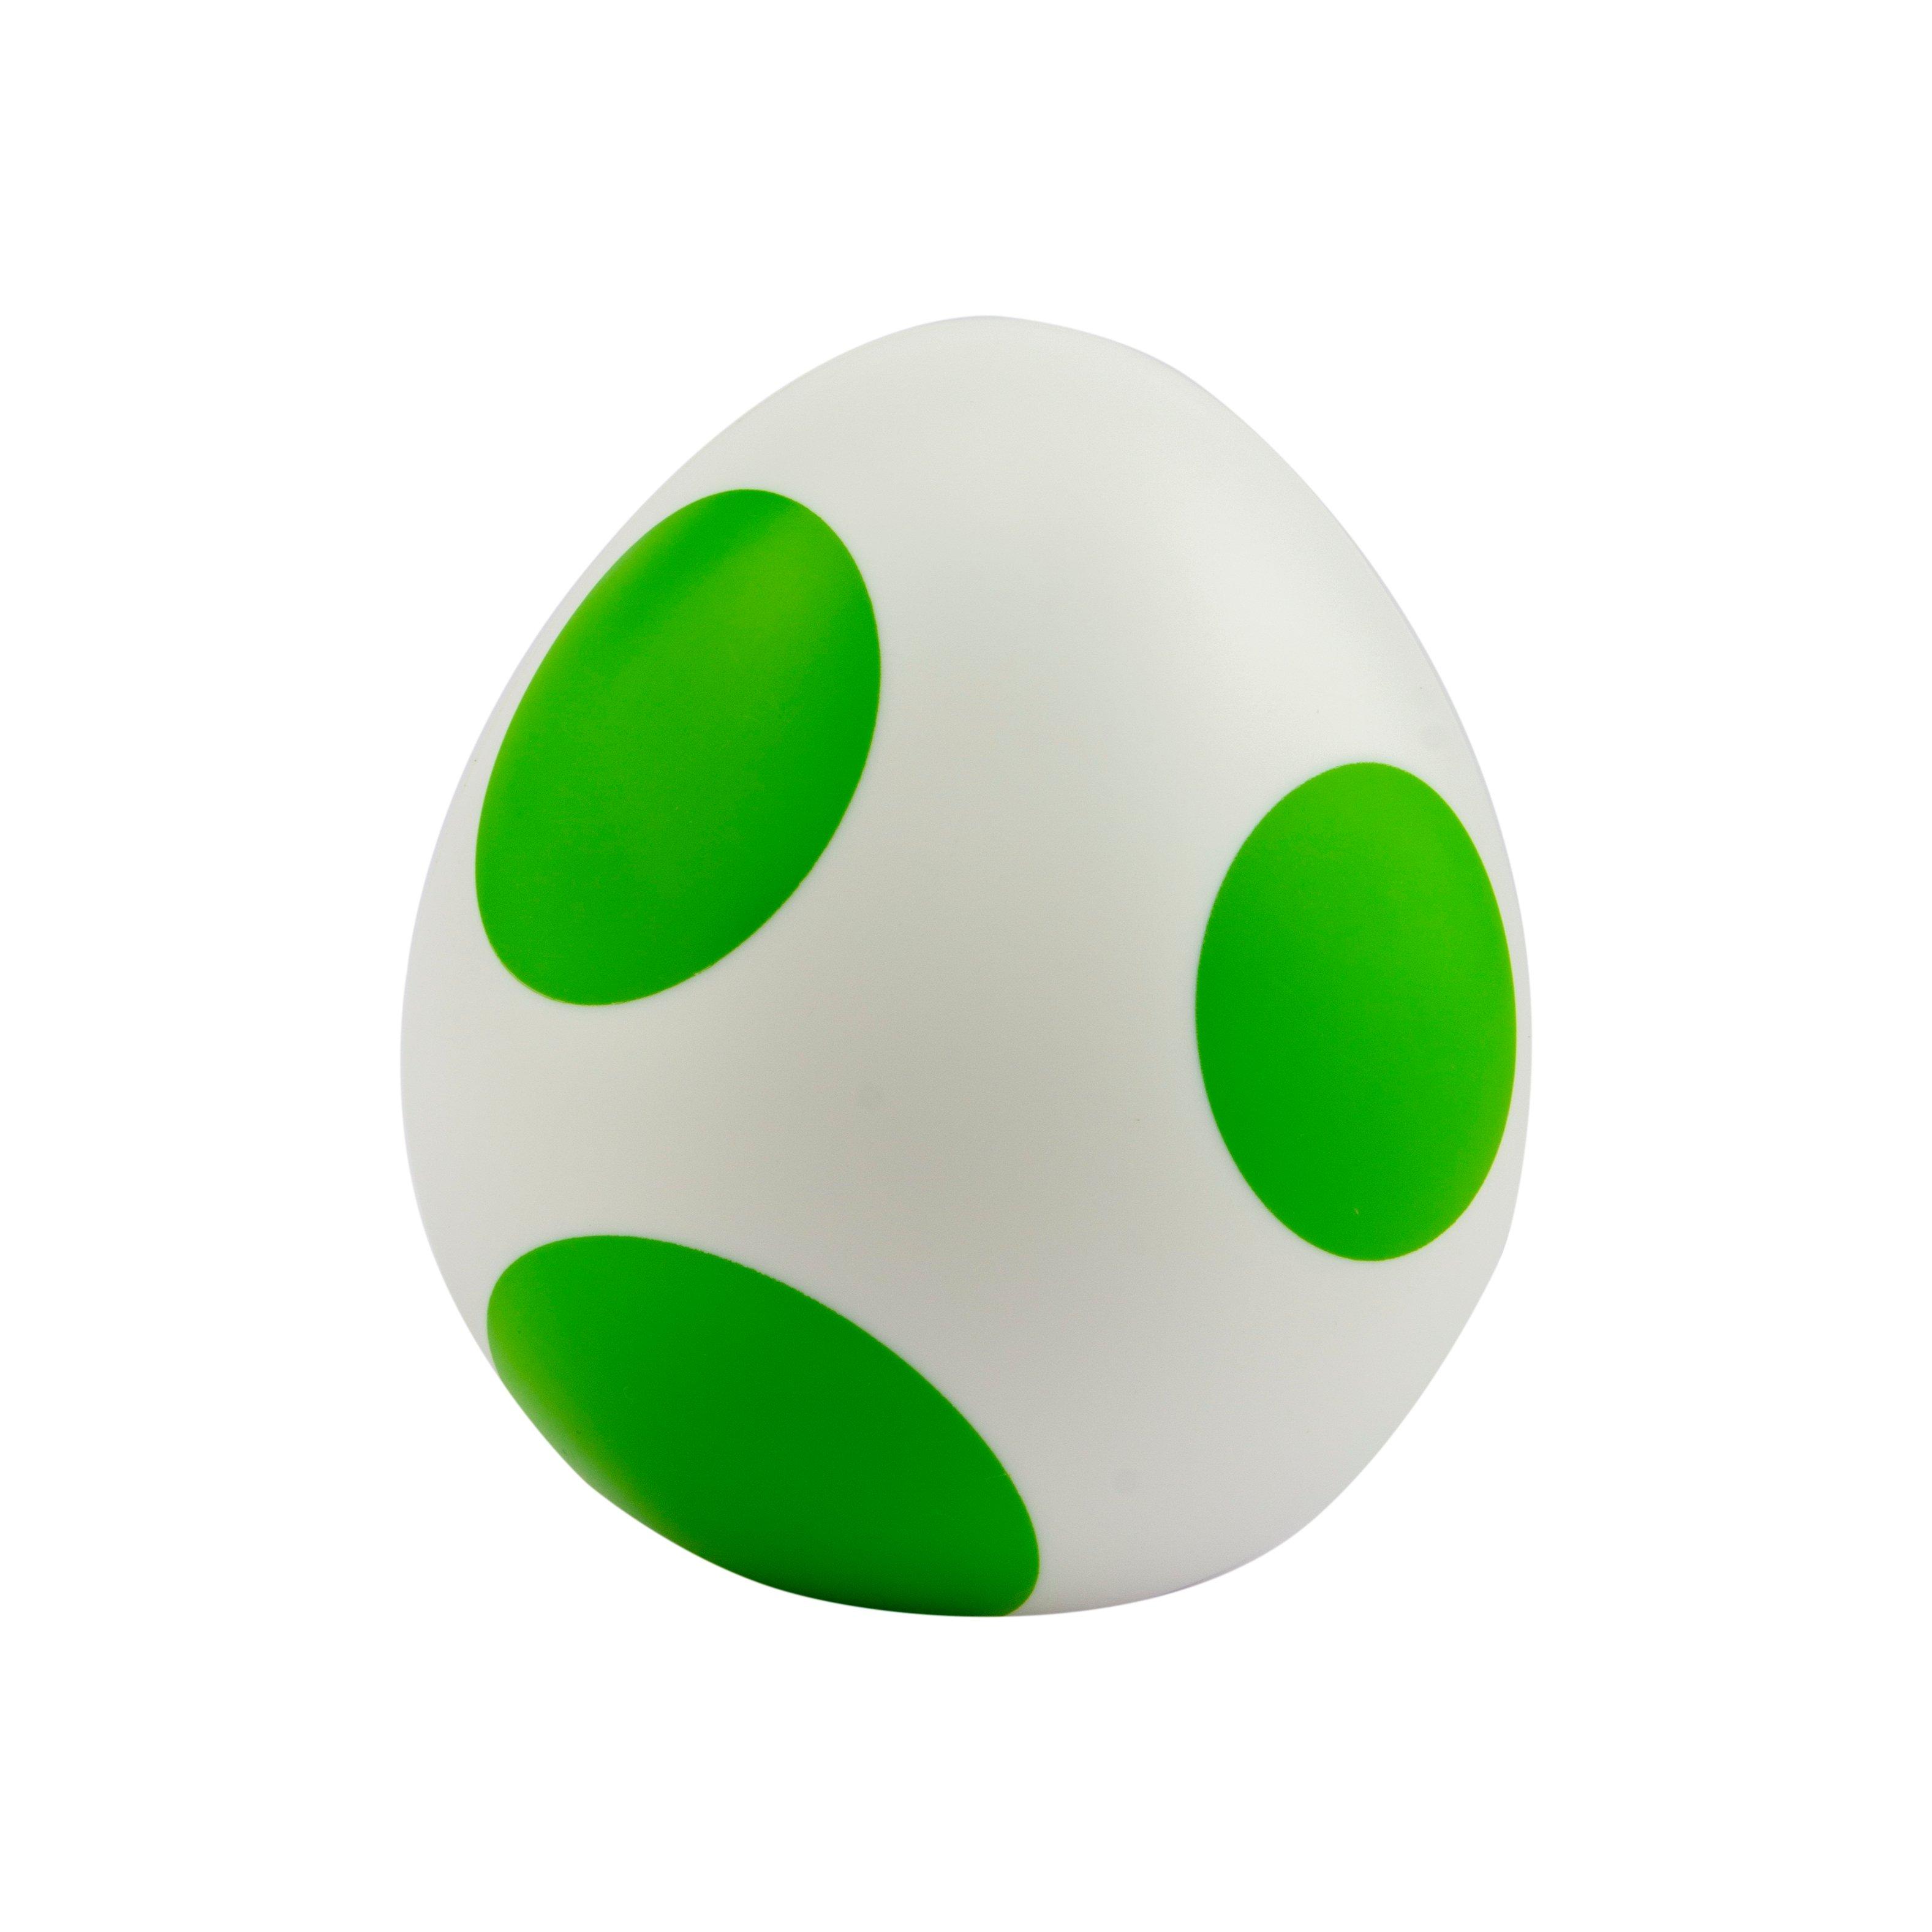 Yoshi's Egg